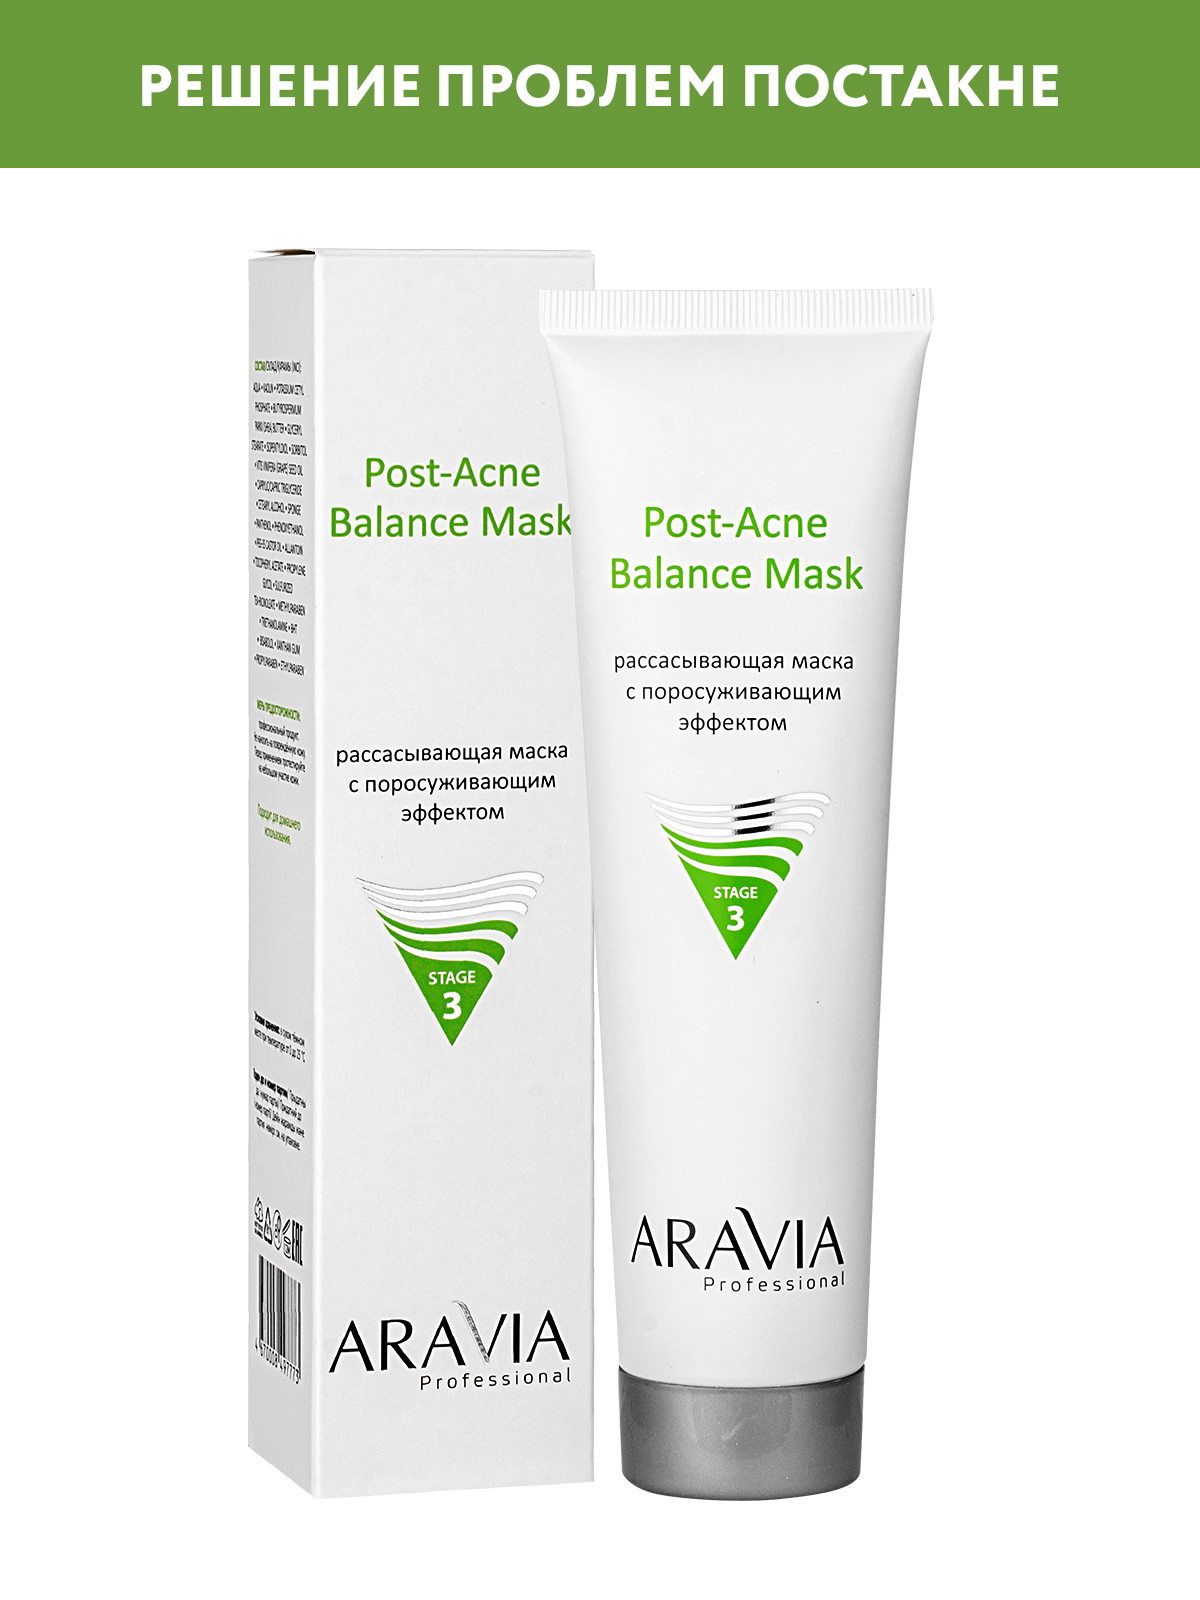 Аравия маска поросуживающая. Aravia Post acne Balance Mask. Aravia professional Post-acne Balance Mask. Аравия маска поросуживающая 100мл. Рассасывающая маска с поросуживающим эффектом Post-acne Balance Mask.